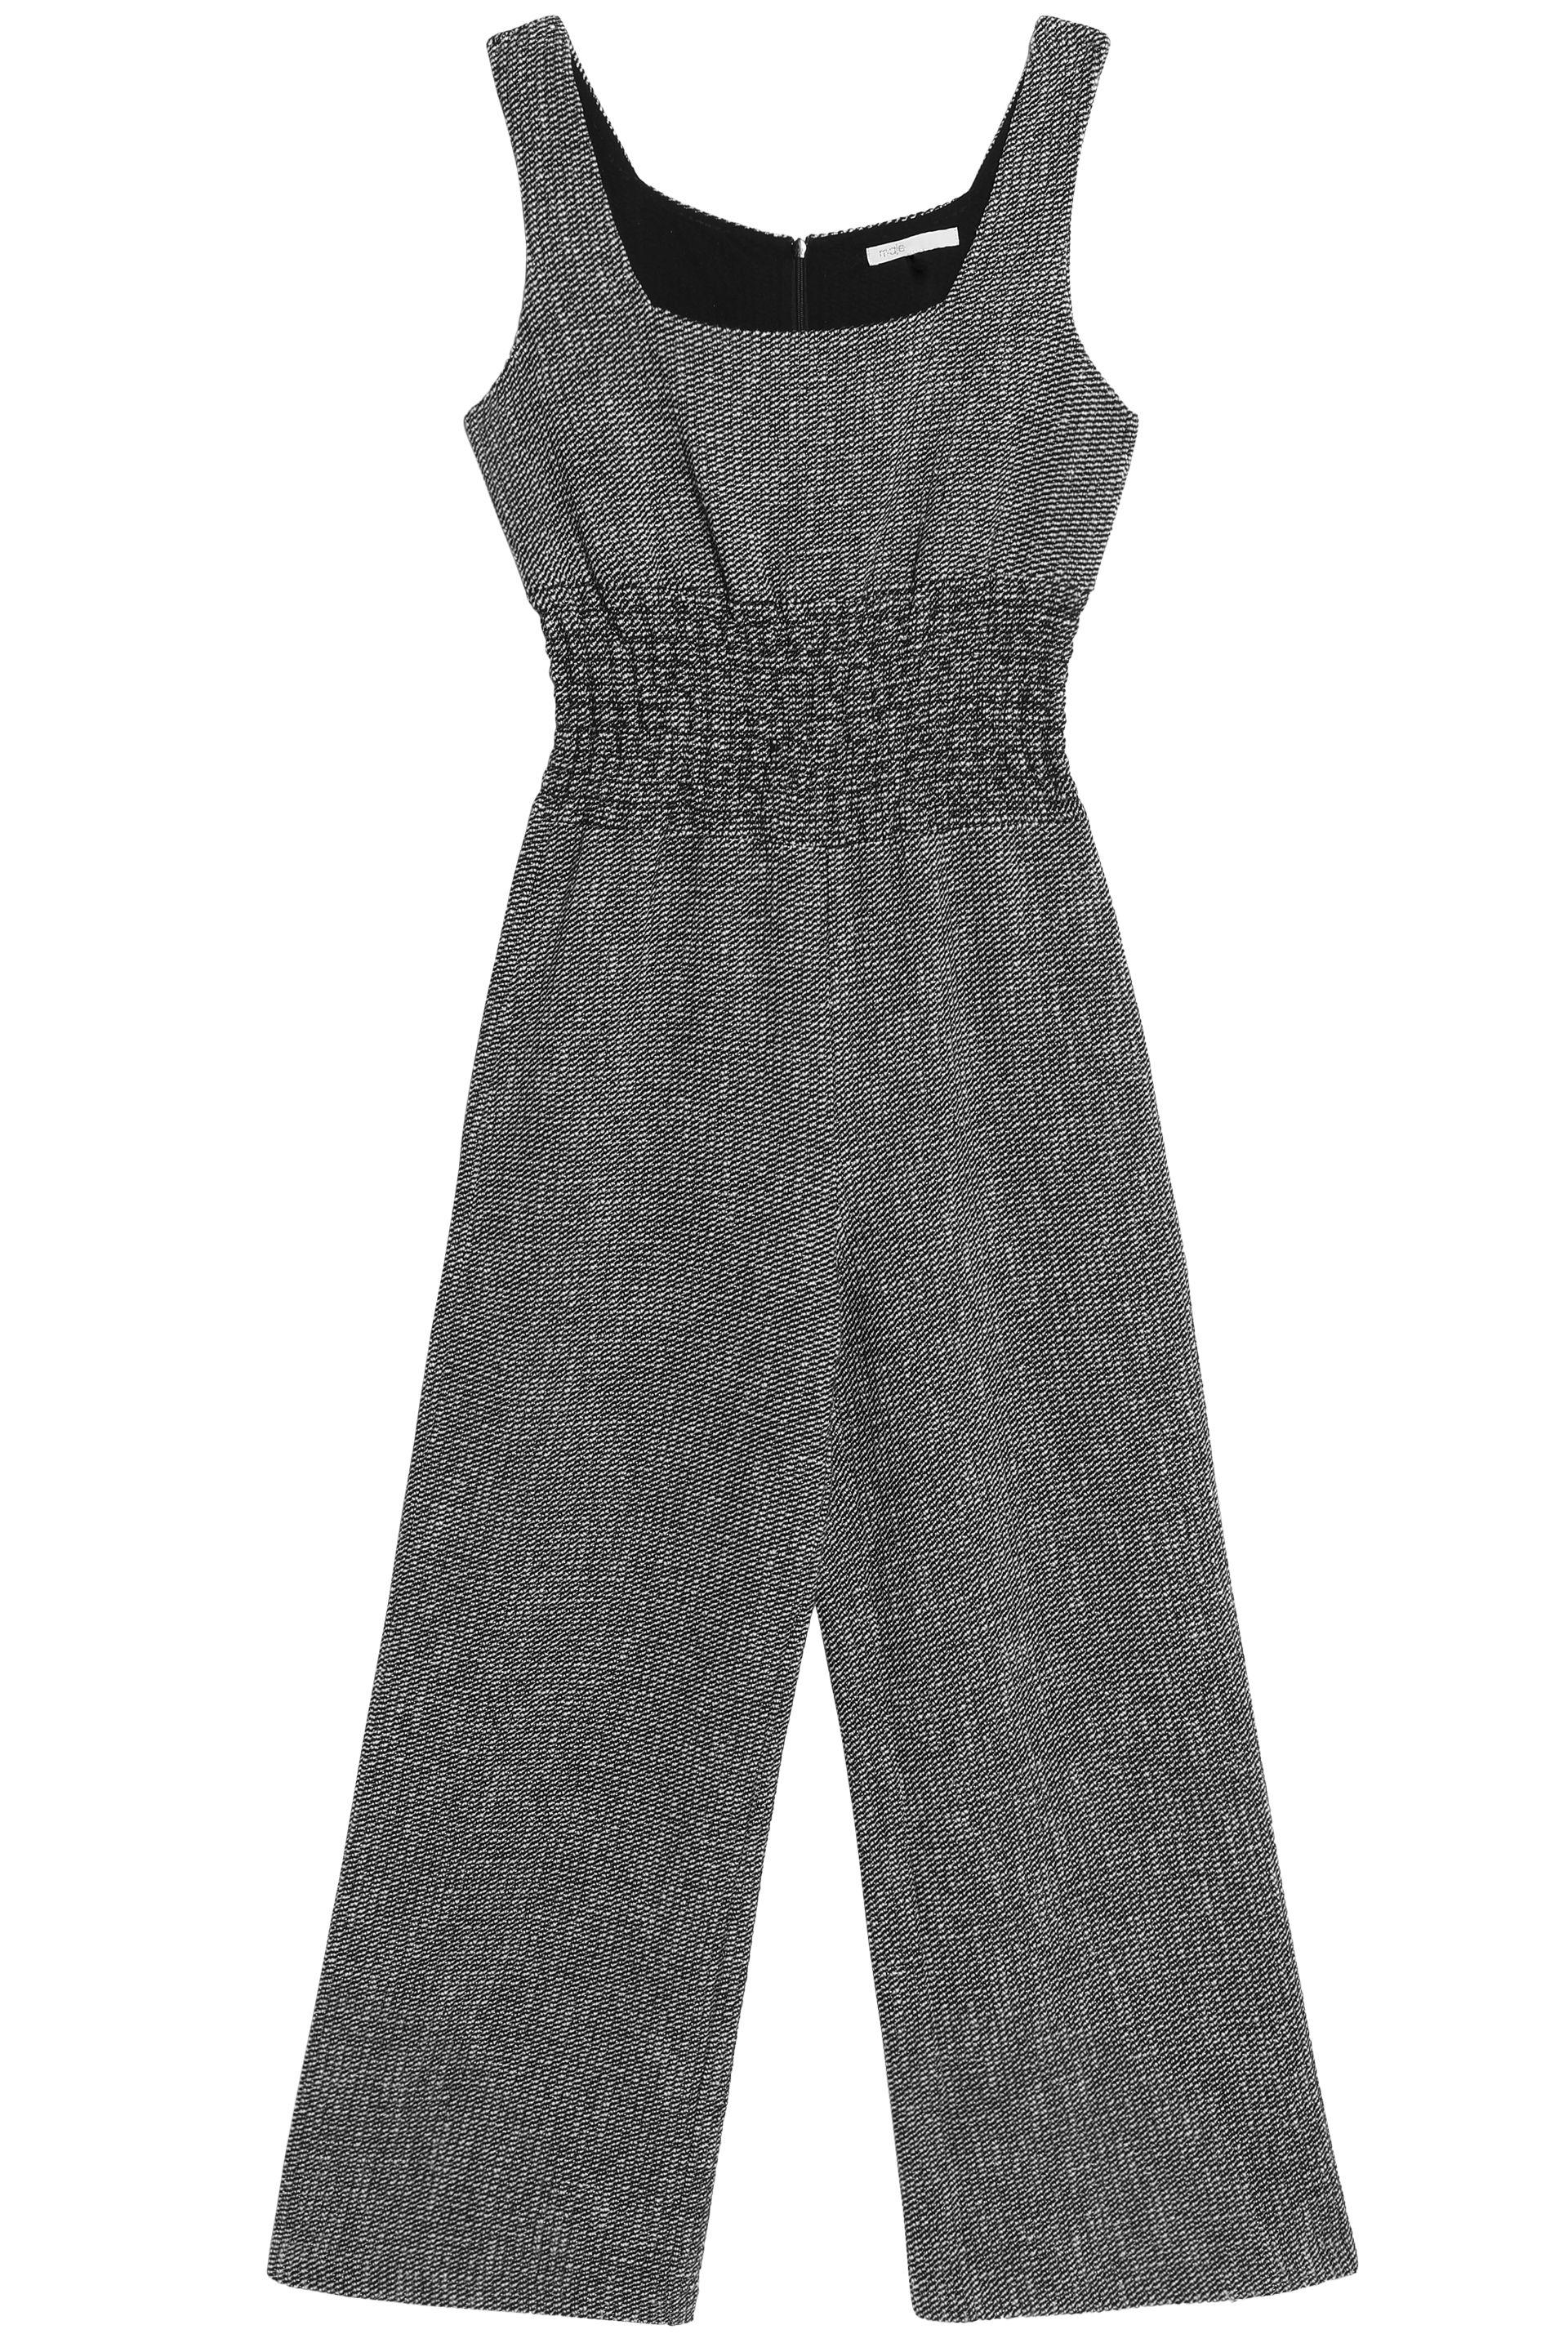 Maje Shirred Cotton-blend Jacquard Wide-leg Jumpsuit in Black - Lyst